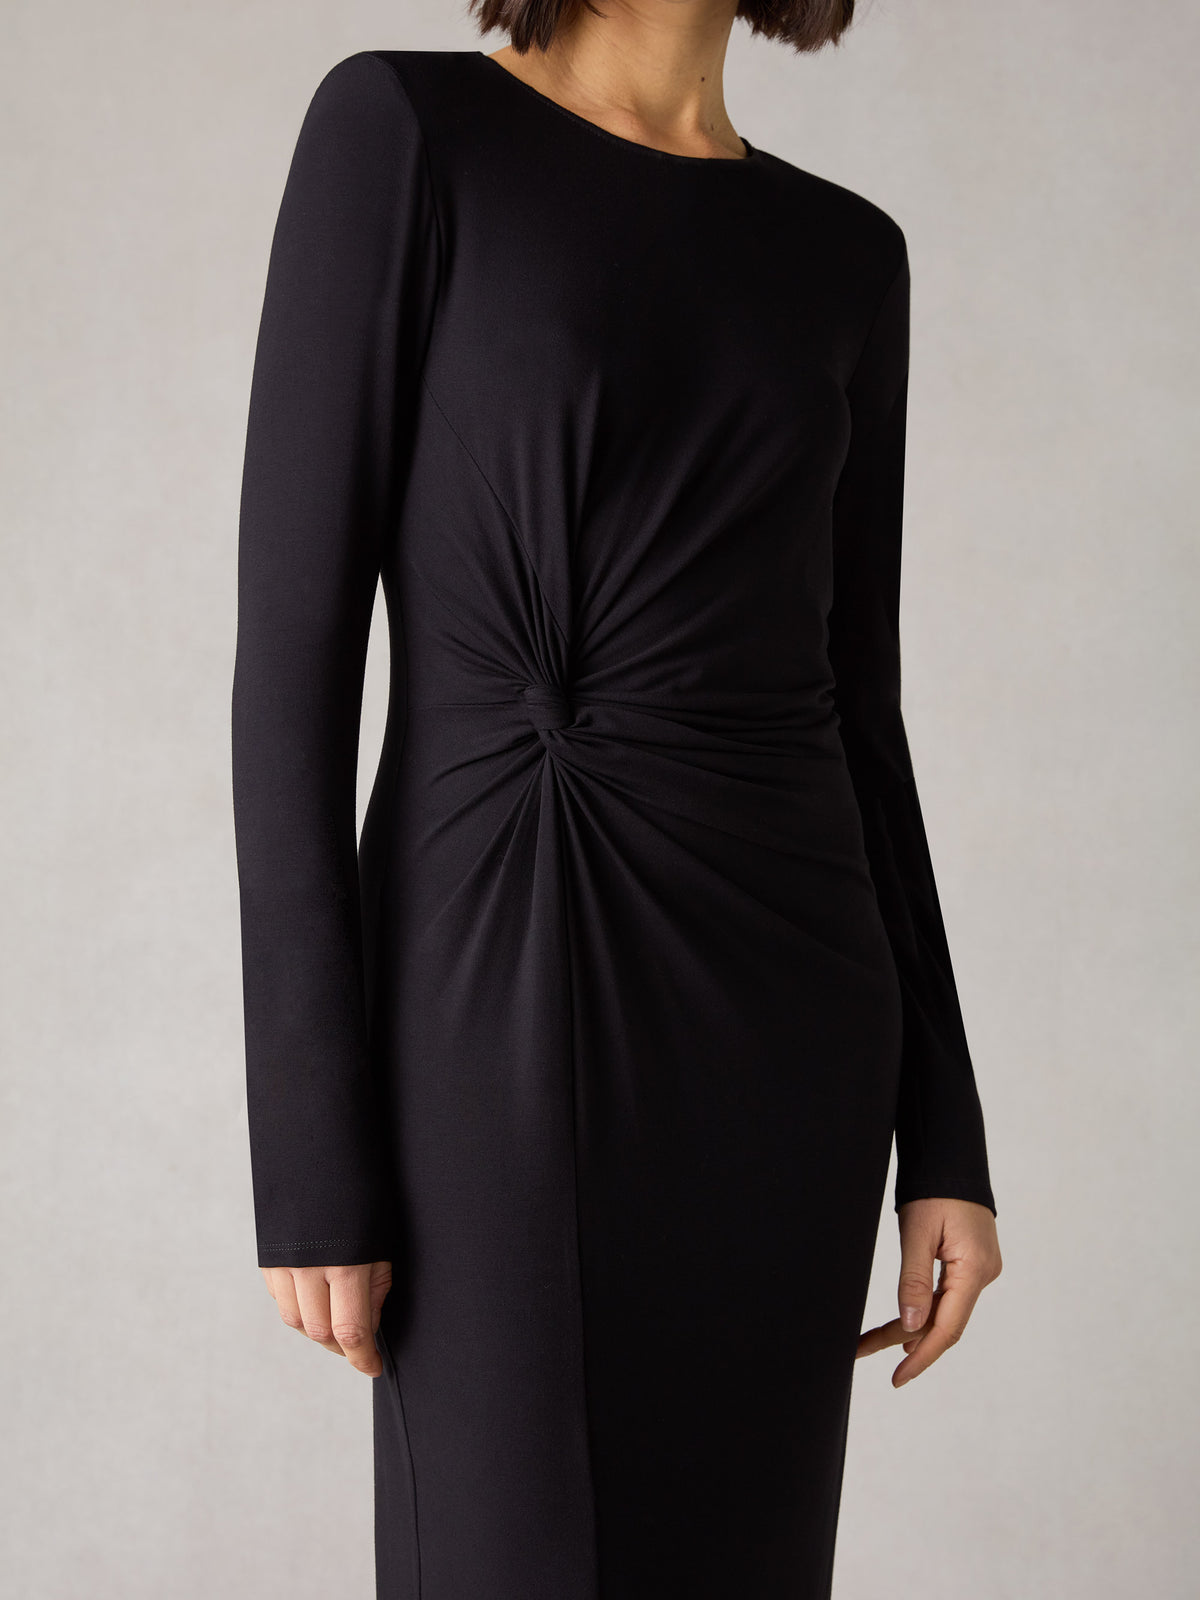 Petite Black Twist Detail Jersey Dress